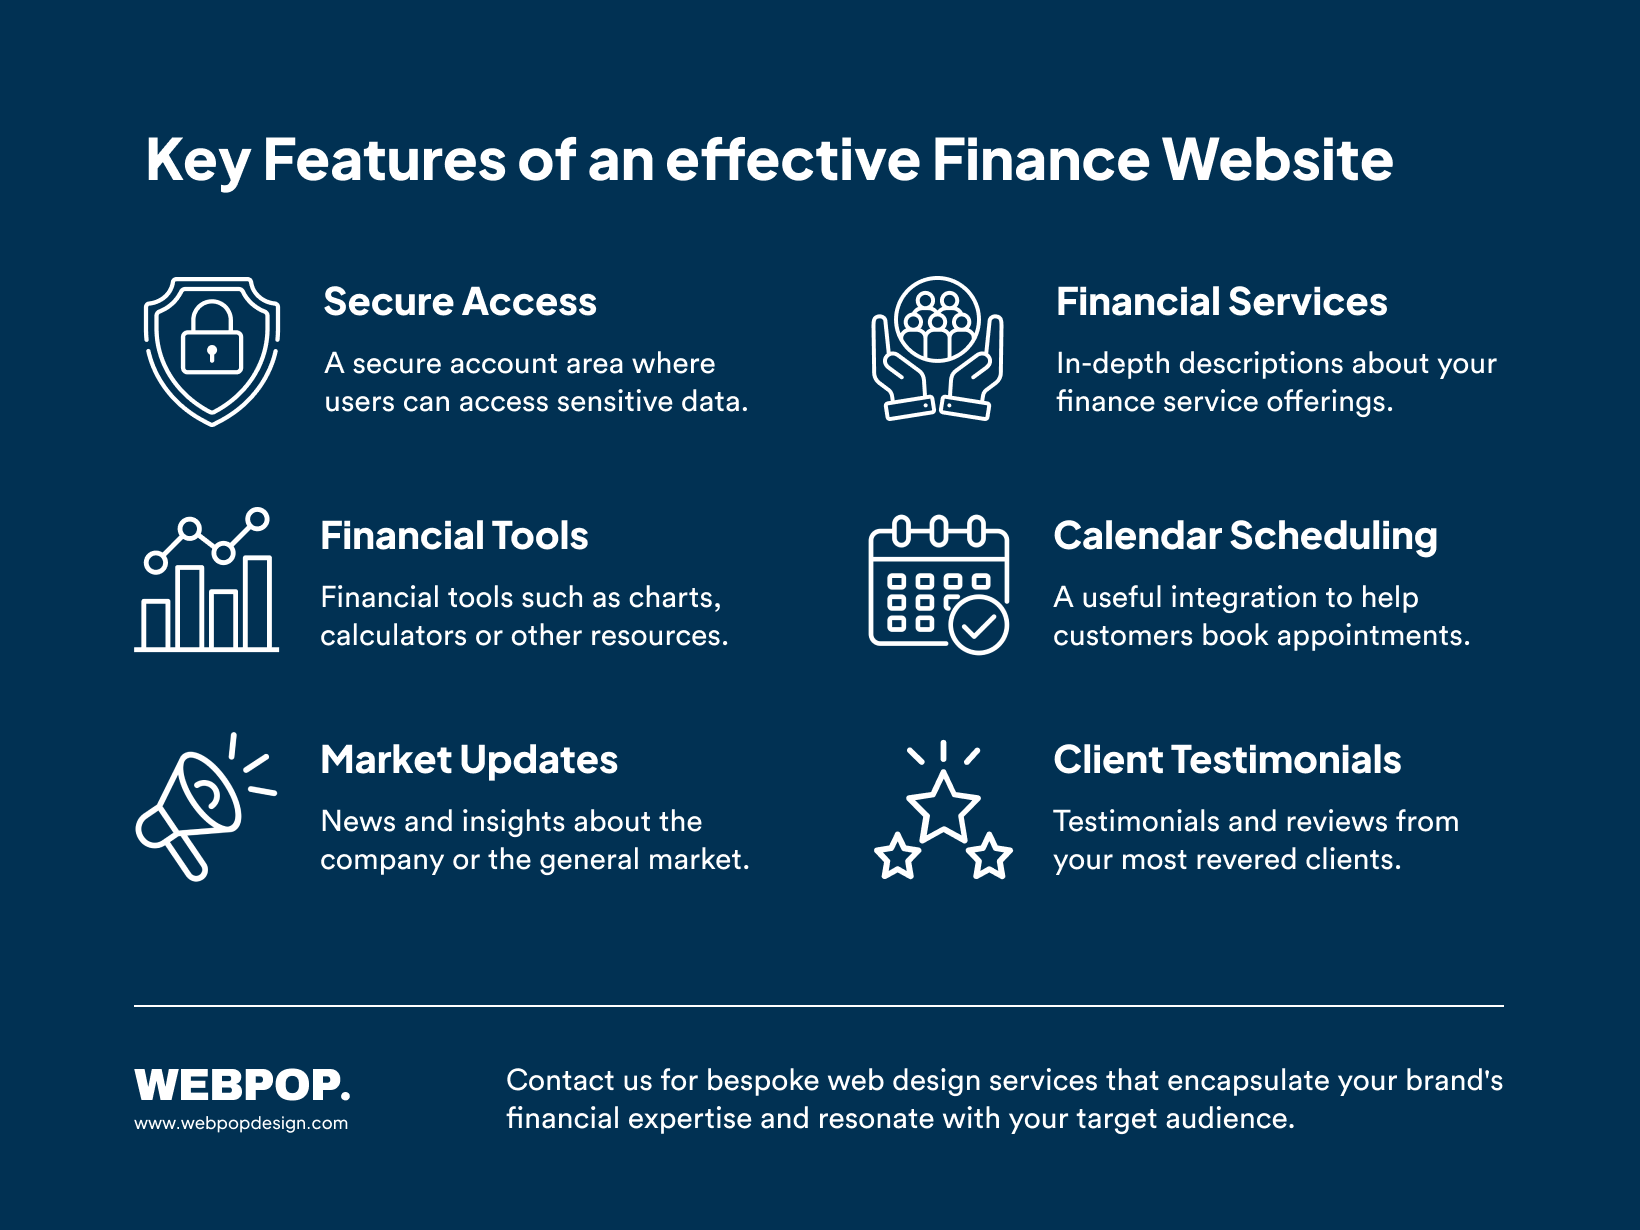 Financial Institution Websites